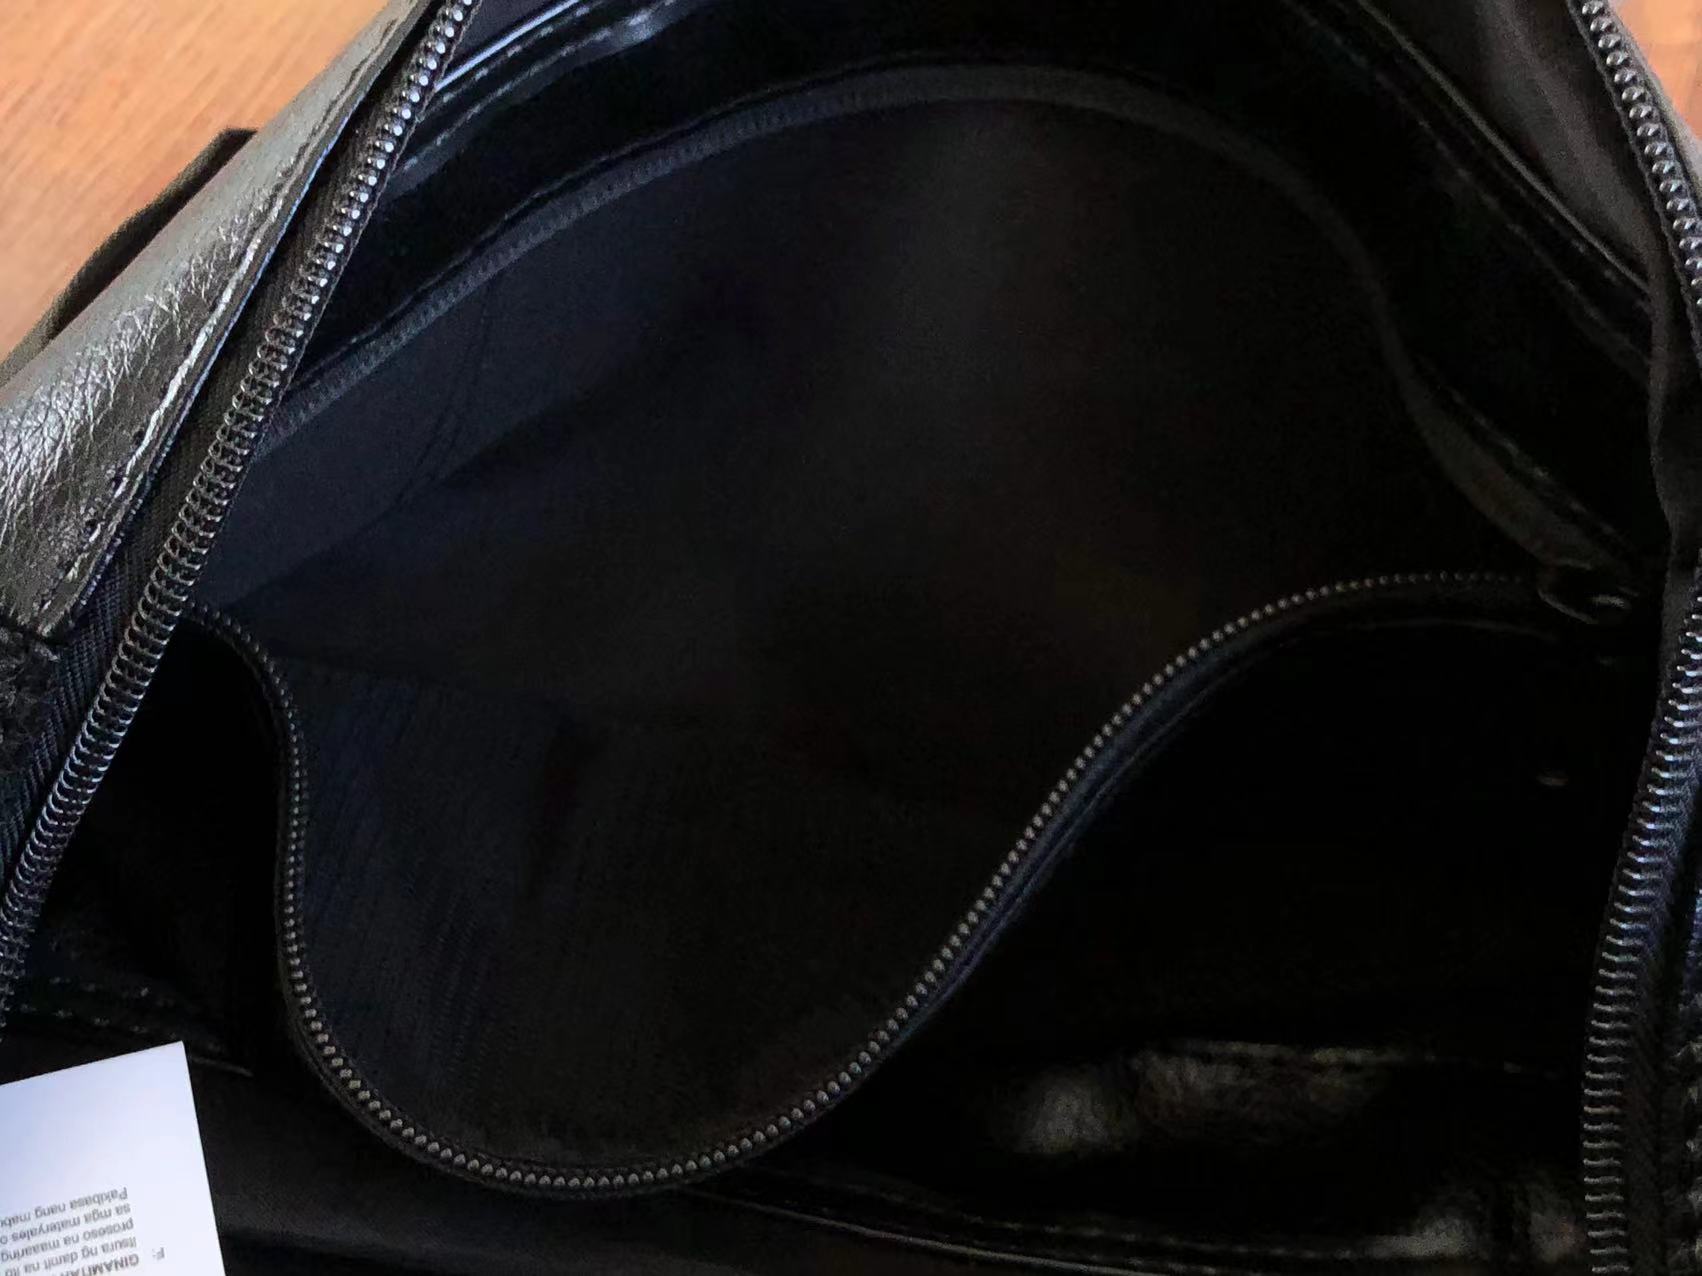 Buy Supreme Nike Leather Duffle Bag FW 19 - Stadium Goods